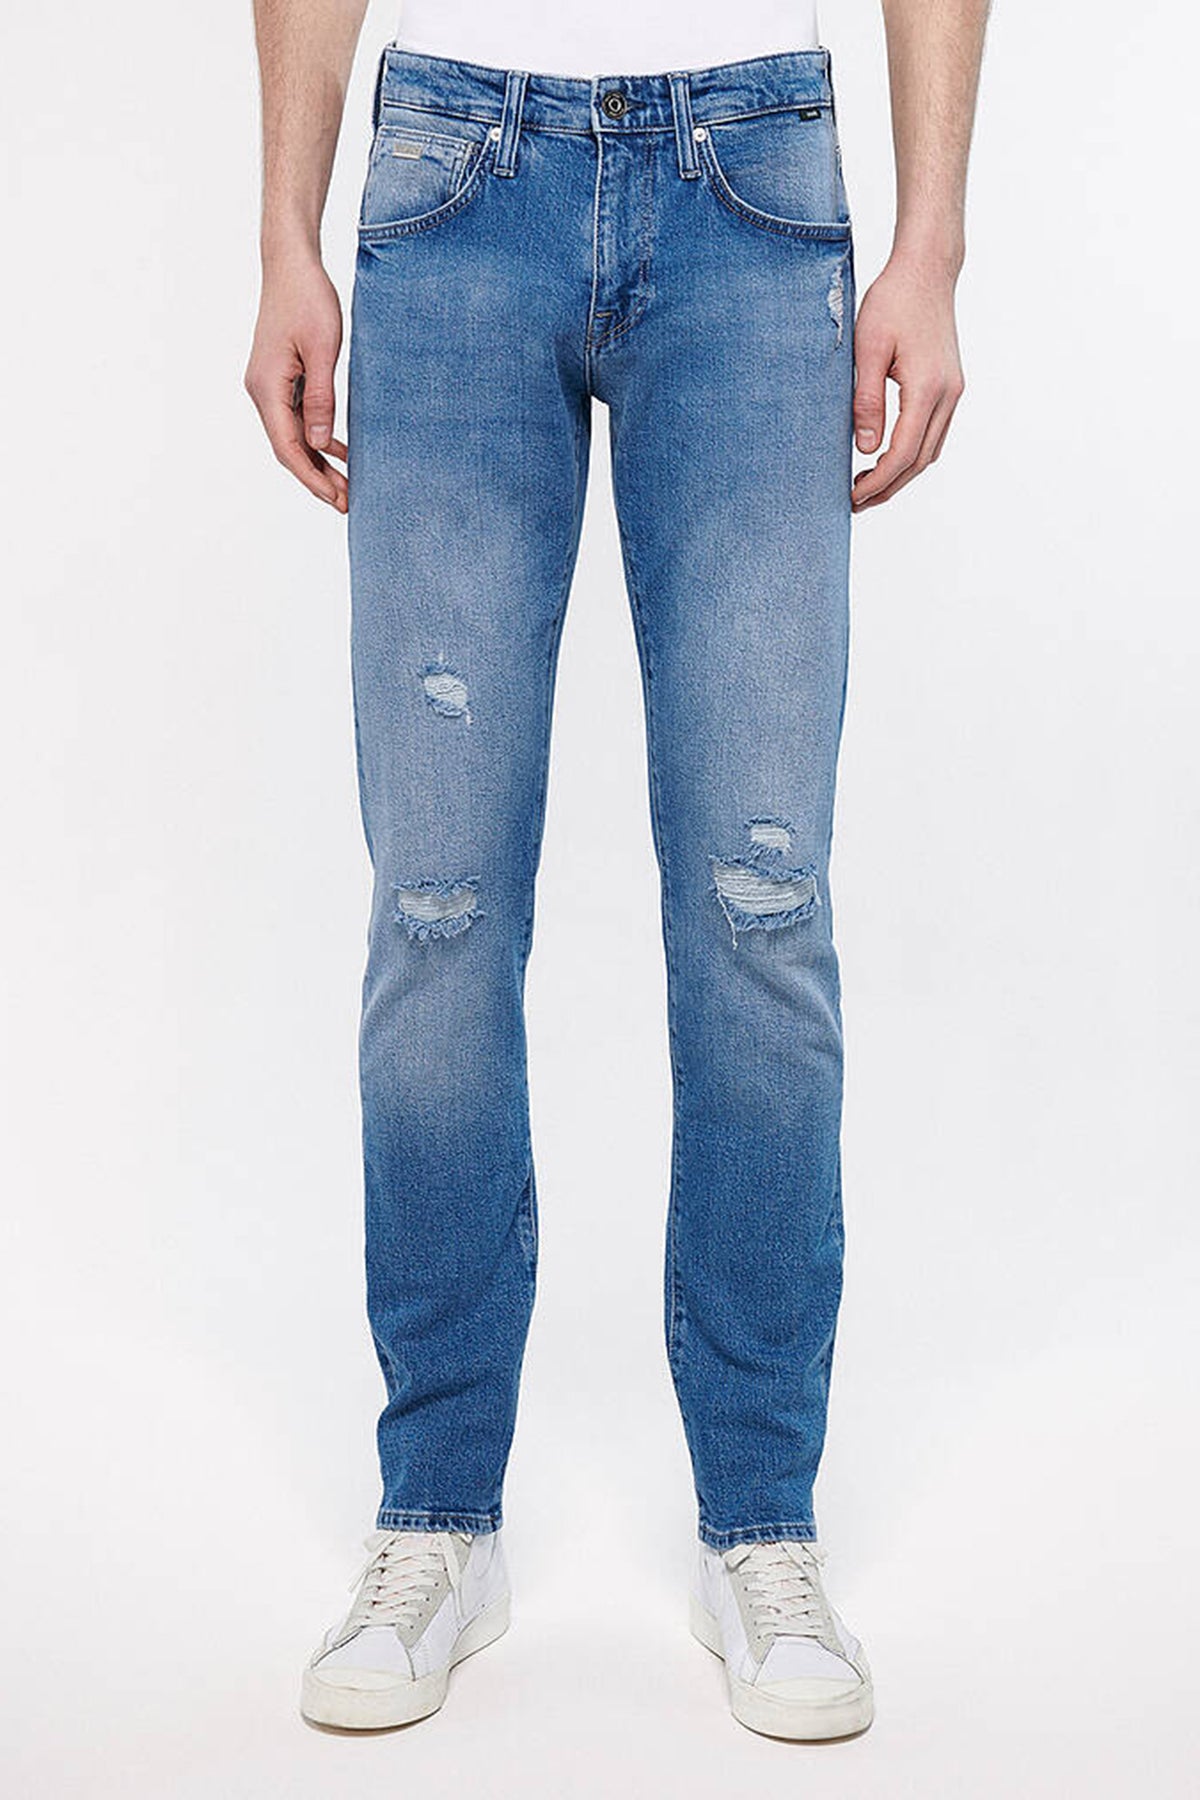 Mavi Jake Yırtıklı Pamuklu Normal Bel Skinny Fit Dar Paça Jeans Erkek Kot Pantolon 0042283796 MAVİ